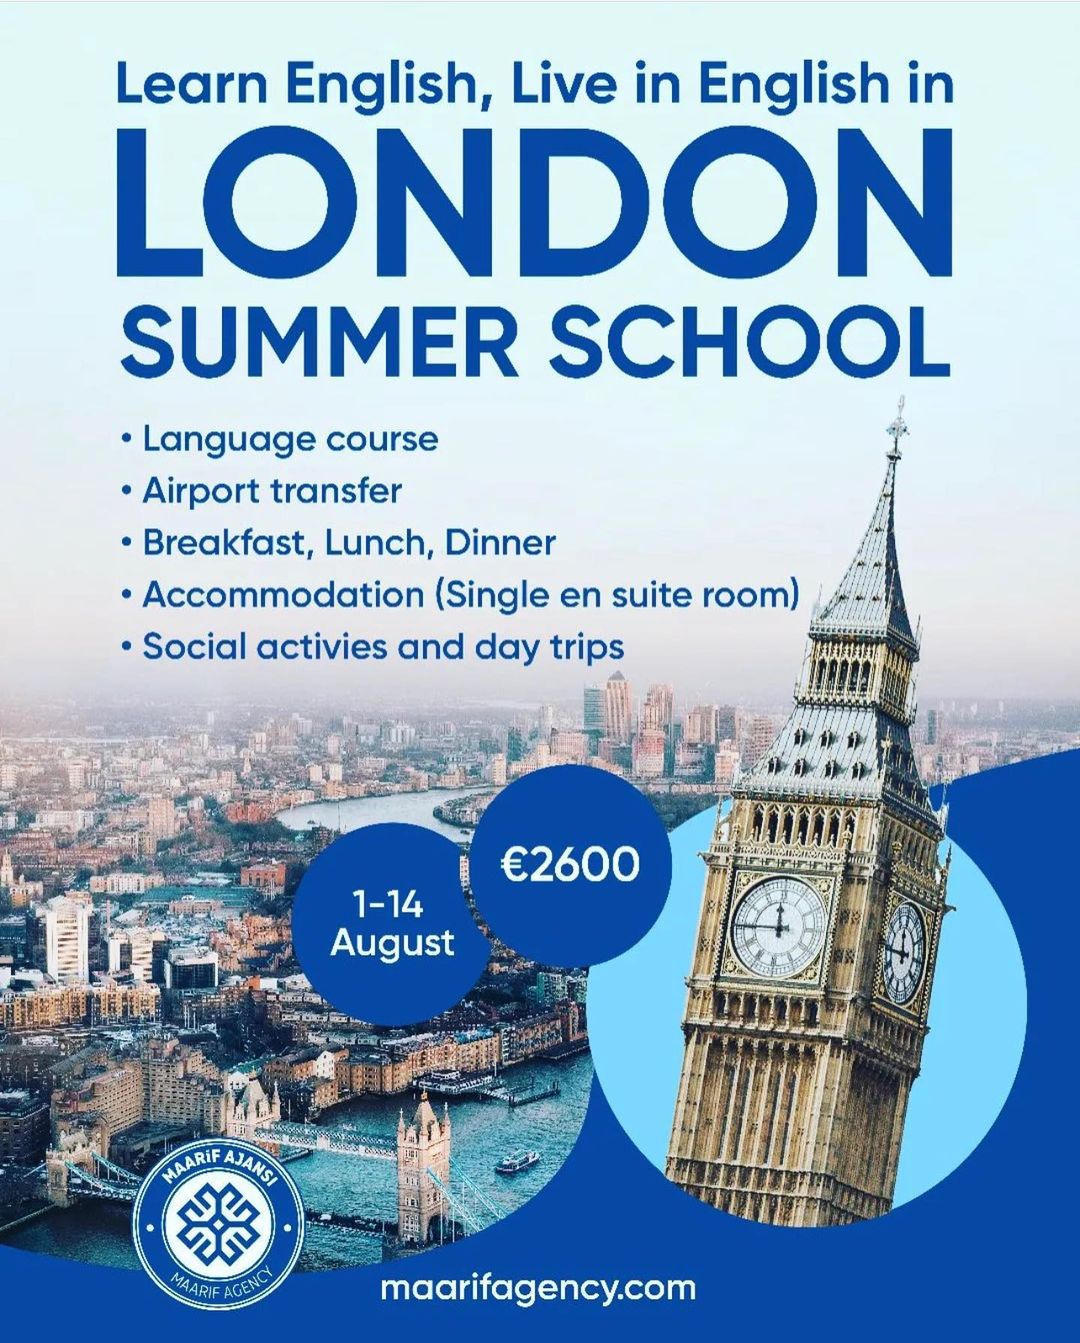 LONDON SUMMER SCHOOL